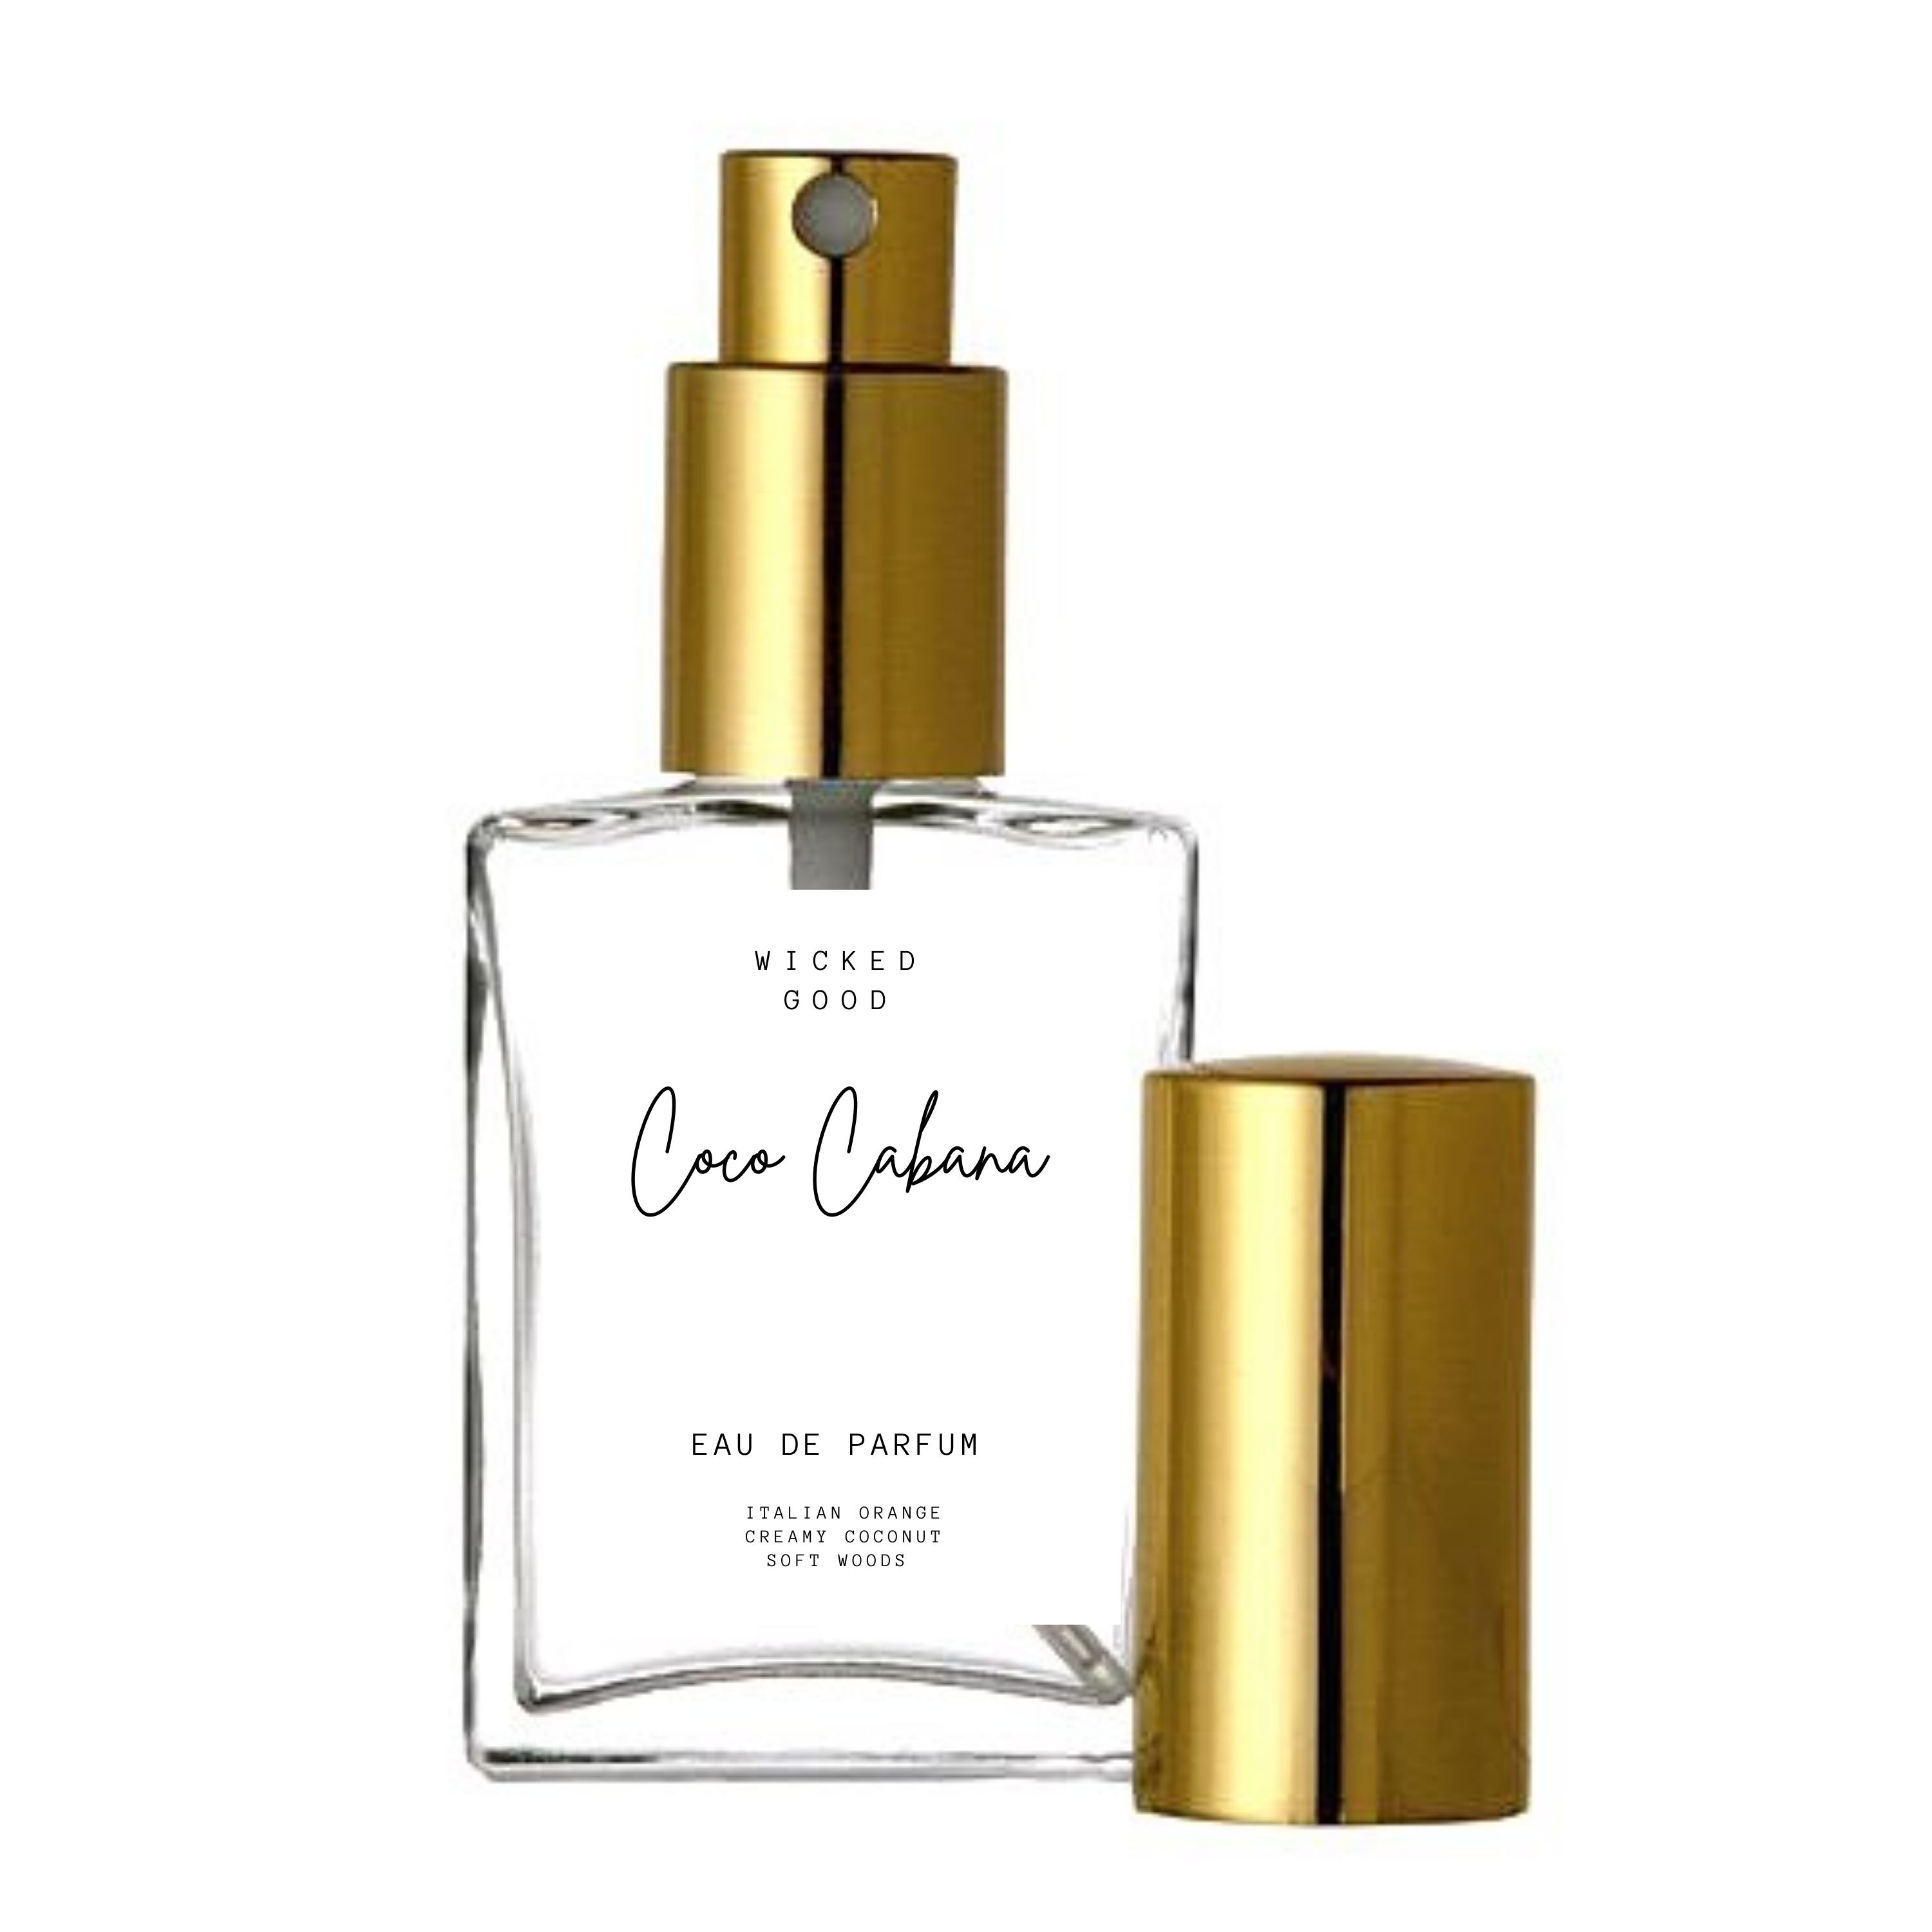 431- Coco Cabana - CA Perfume: Best Perfume for Less